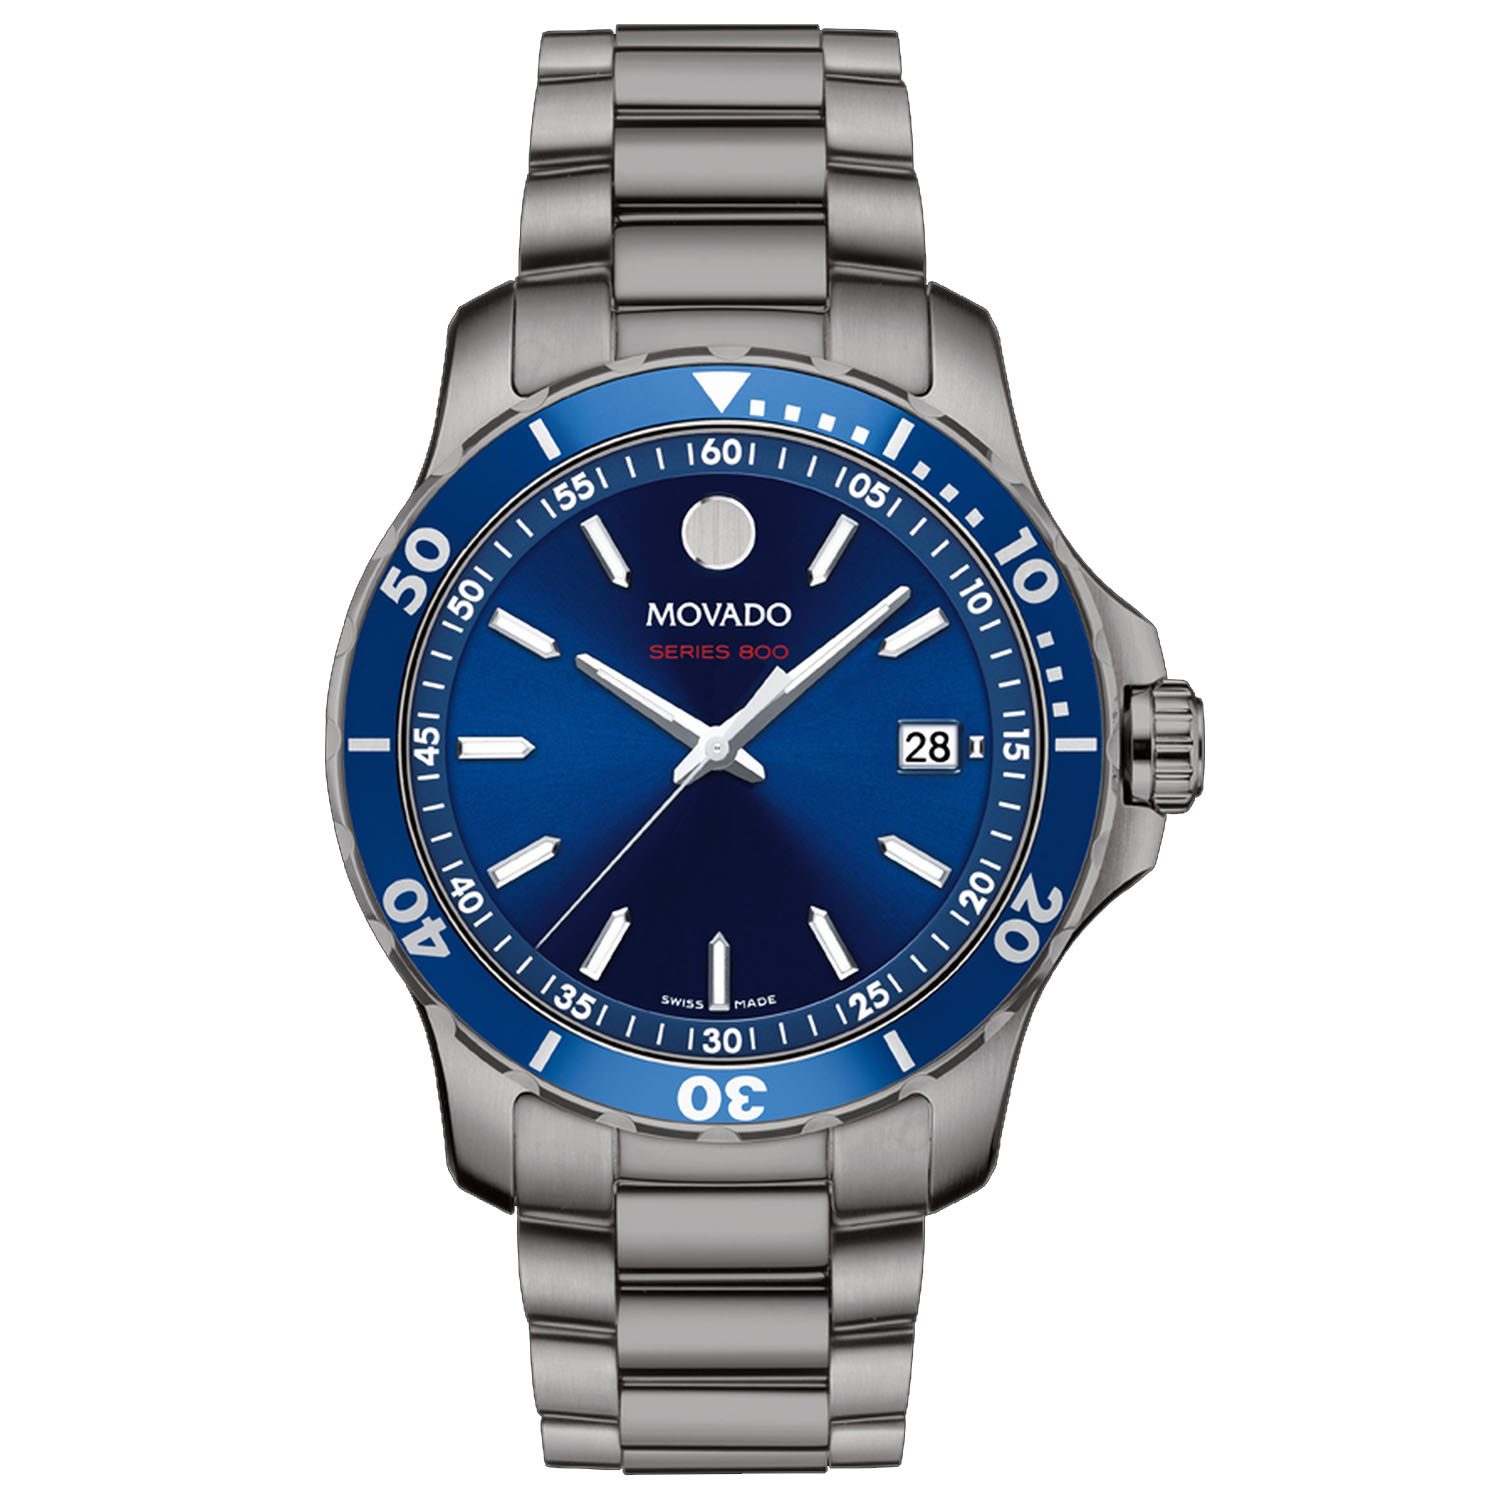 Movado Men's Series 800 Blue Dial Watch - 2600159